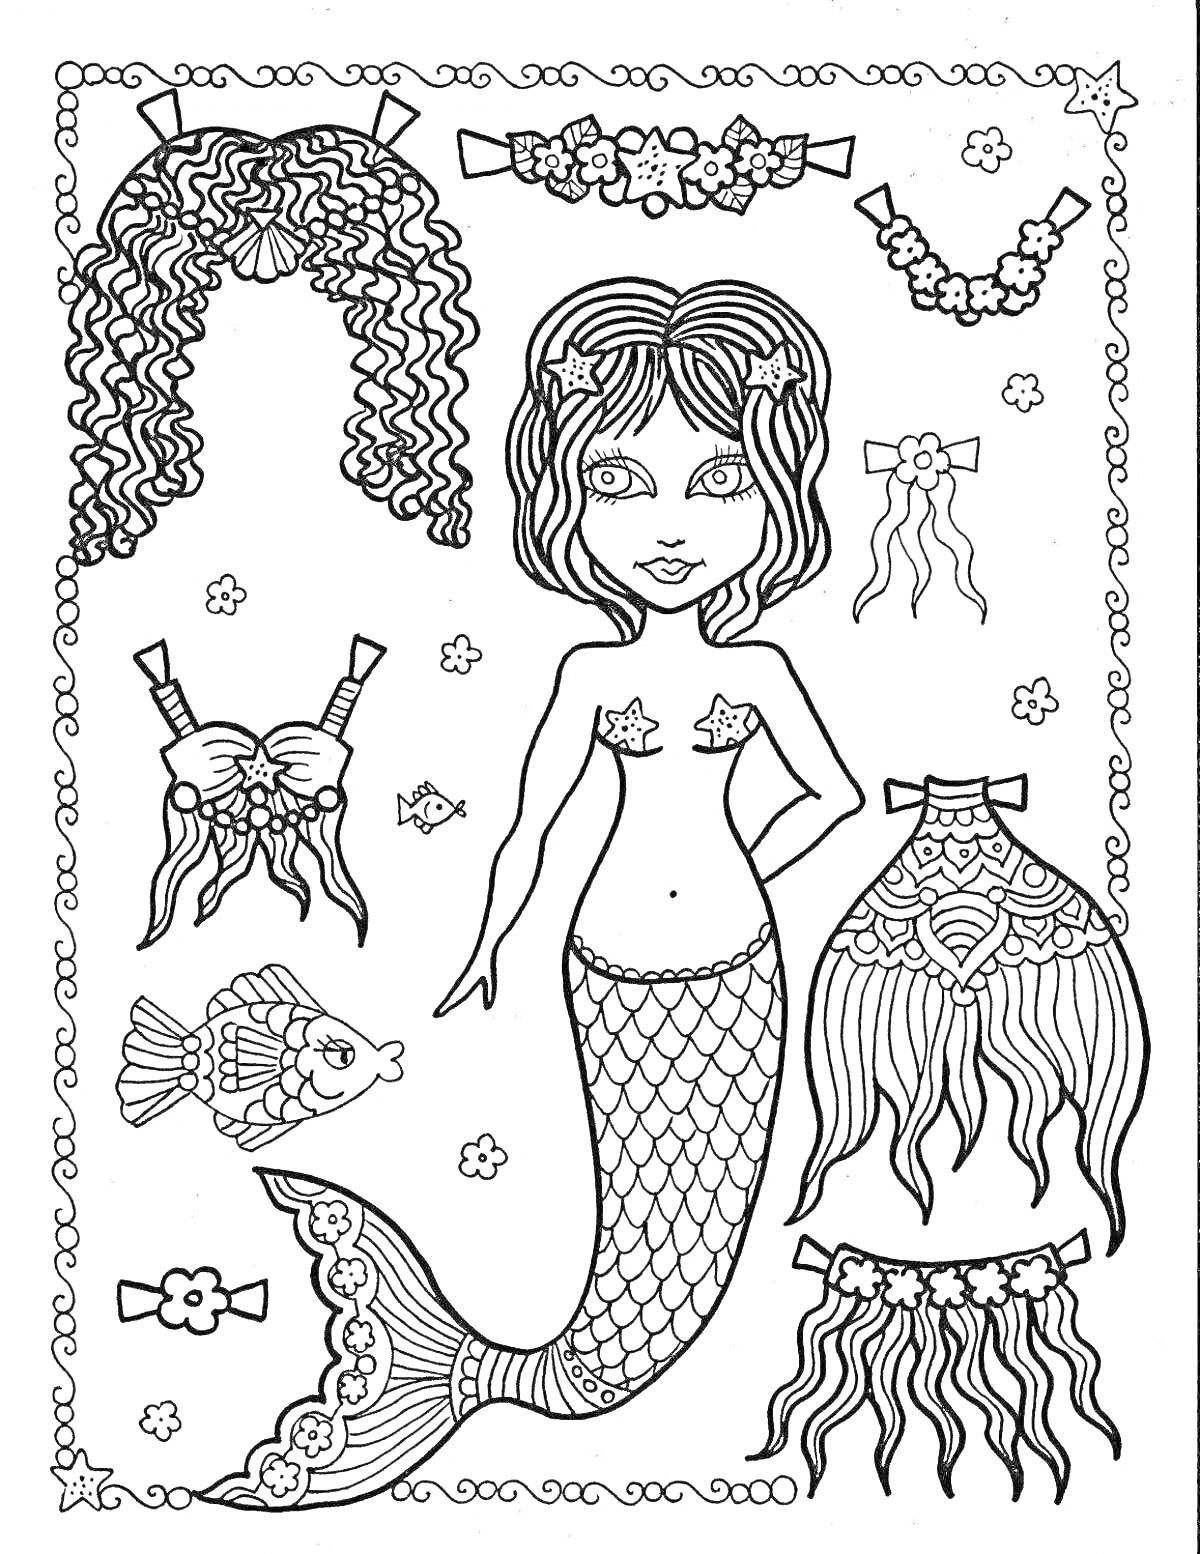 Раскраска Кукла ЛОЛ-русалка с аксессуарами: парик, корона, летний лиф, рыбка, пояс, заколка